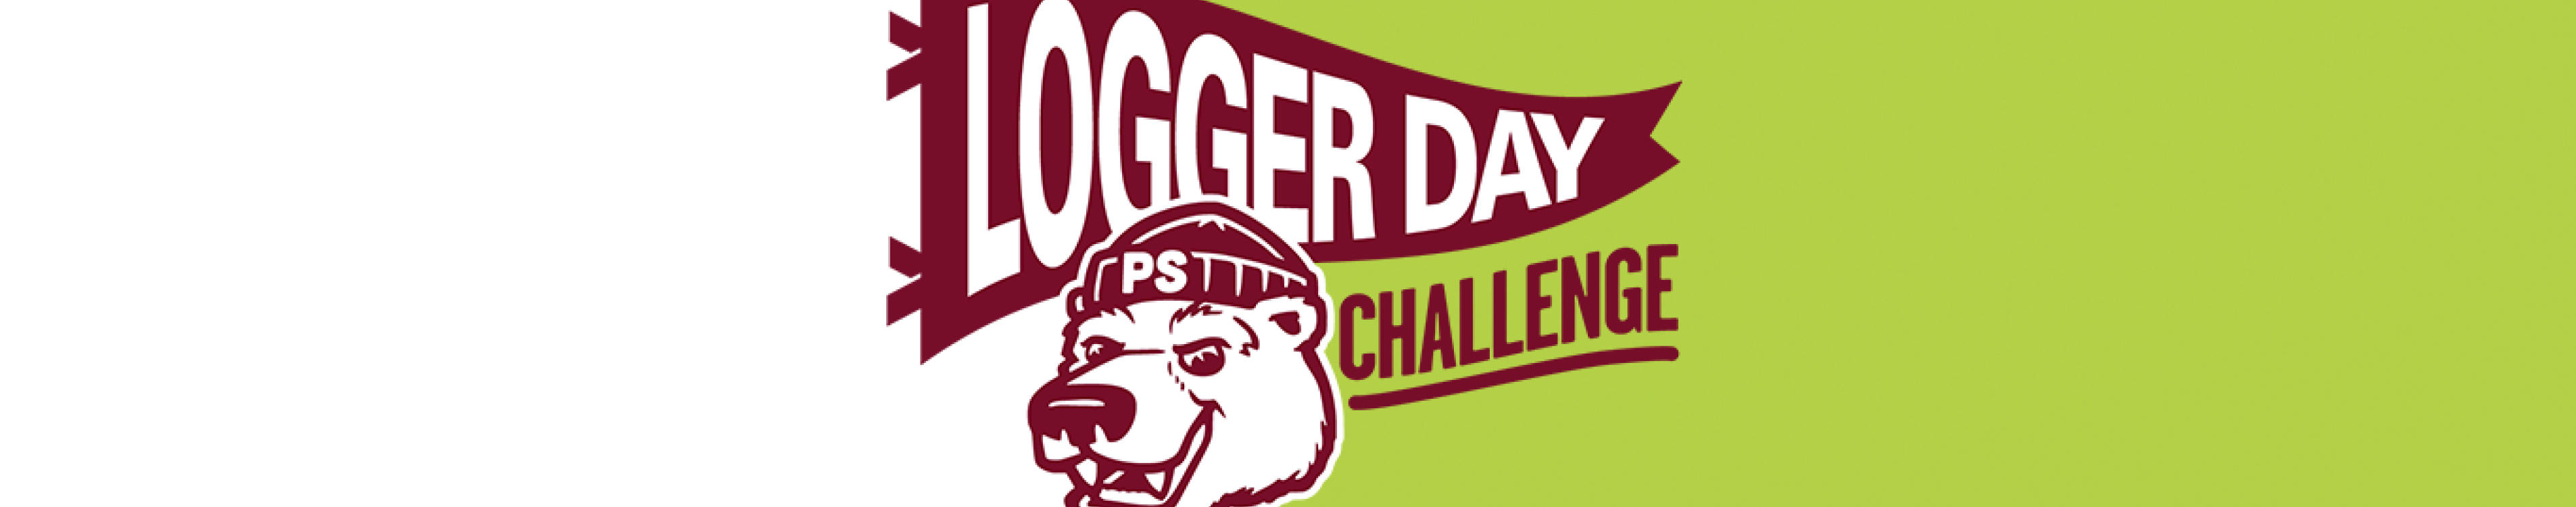 Logger Day Challenge